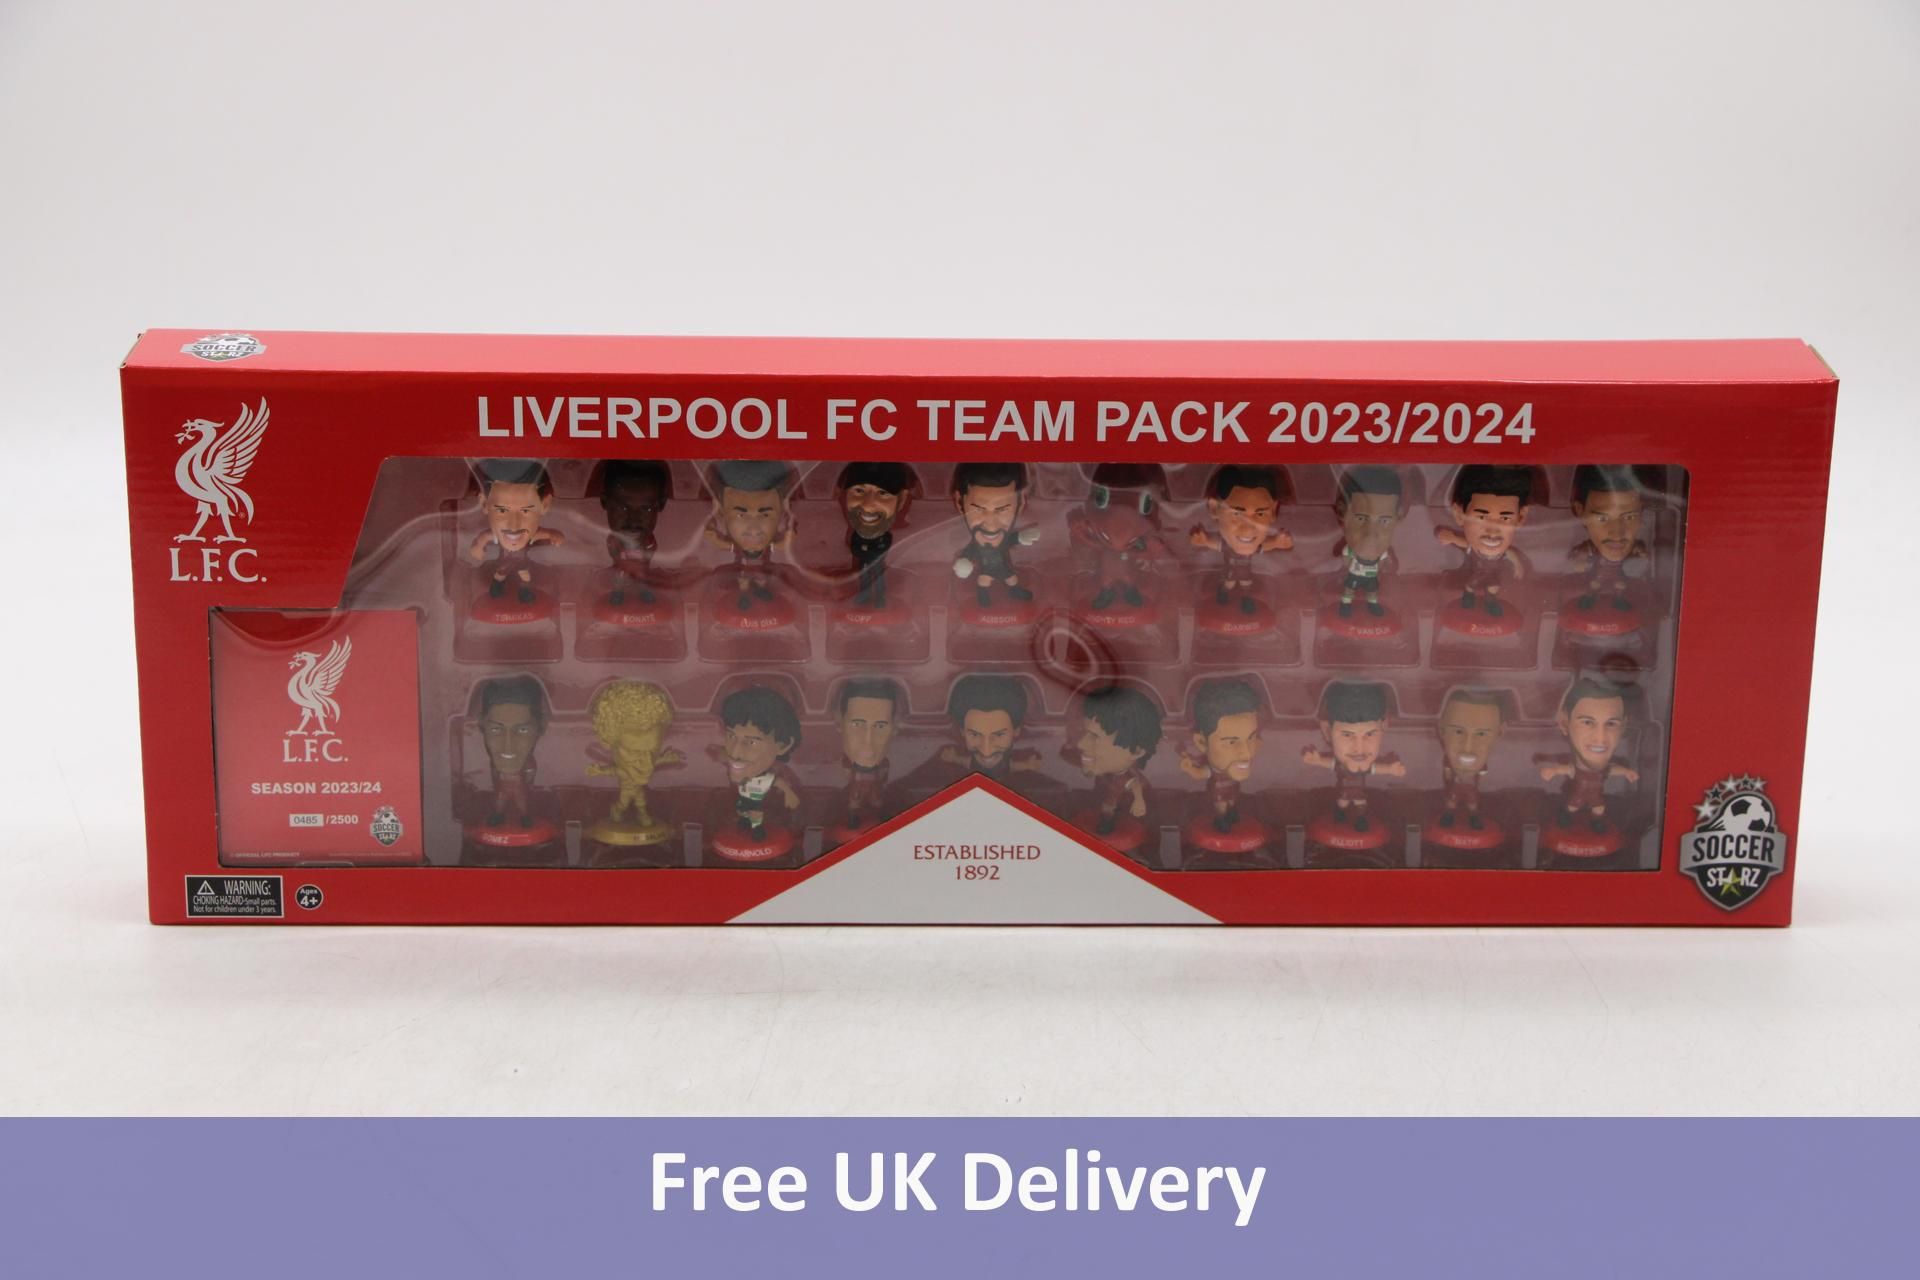 Soccer Starz Liverpool FC 20 Piece Team Pack 2023/24 Season Includes a Gold Mo Salah